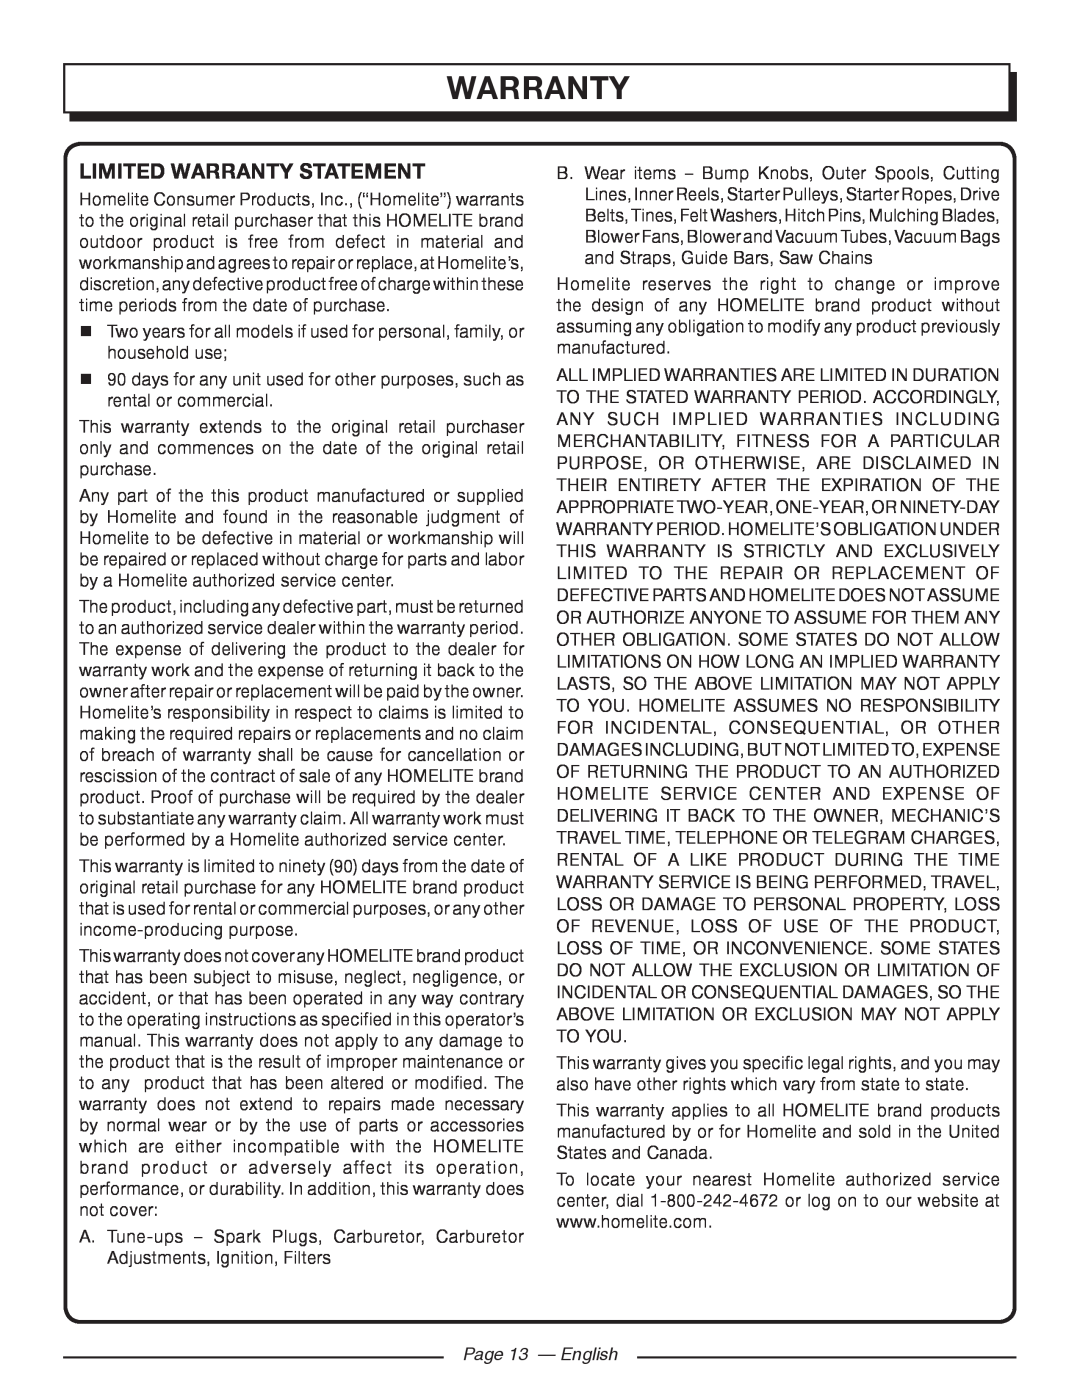 Homelite UT46510 manuel dutilisation Limited Warranty Statement, Page 13 - English 